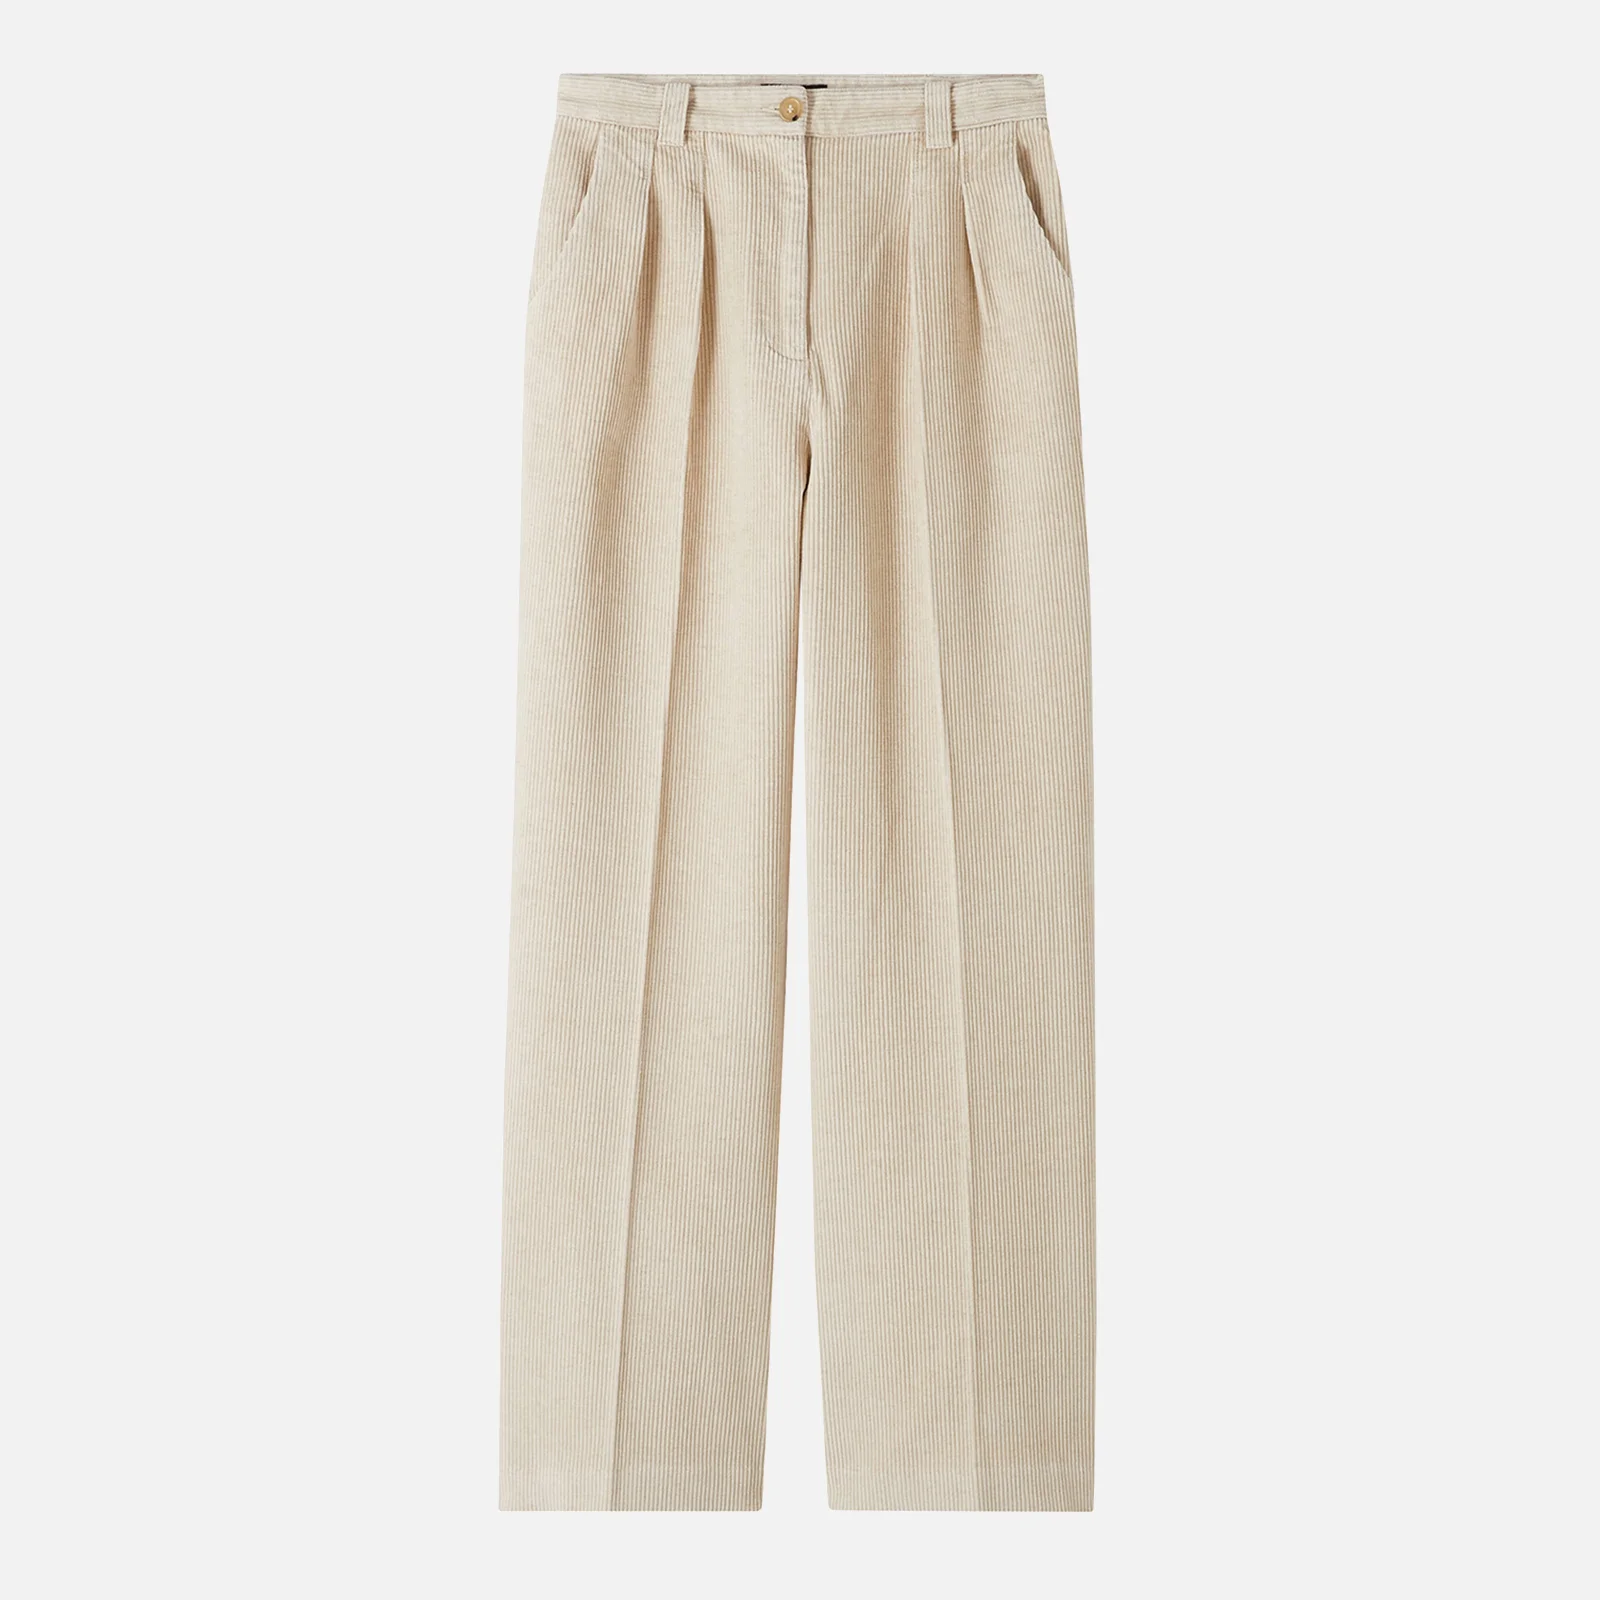 A.P.C. Cotton and Linen-Blend Corduroy Trousers Image 1